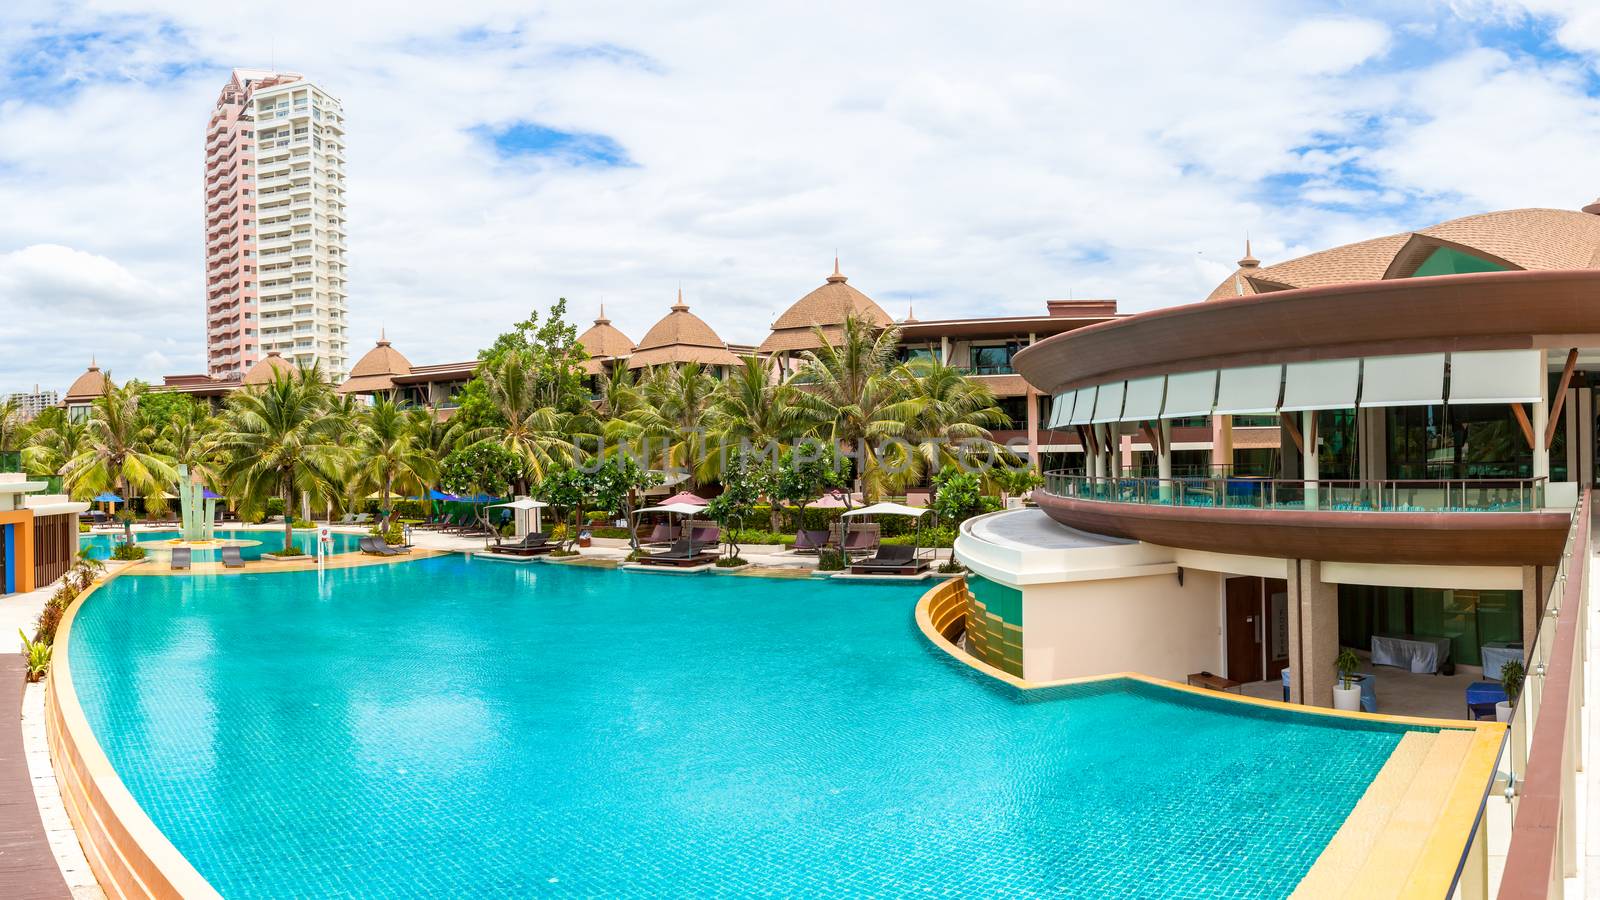 Swimming pool of luxury hotel by FrameAngel